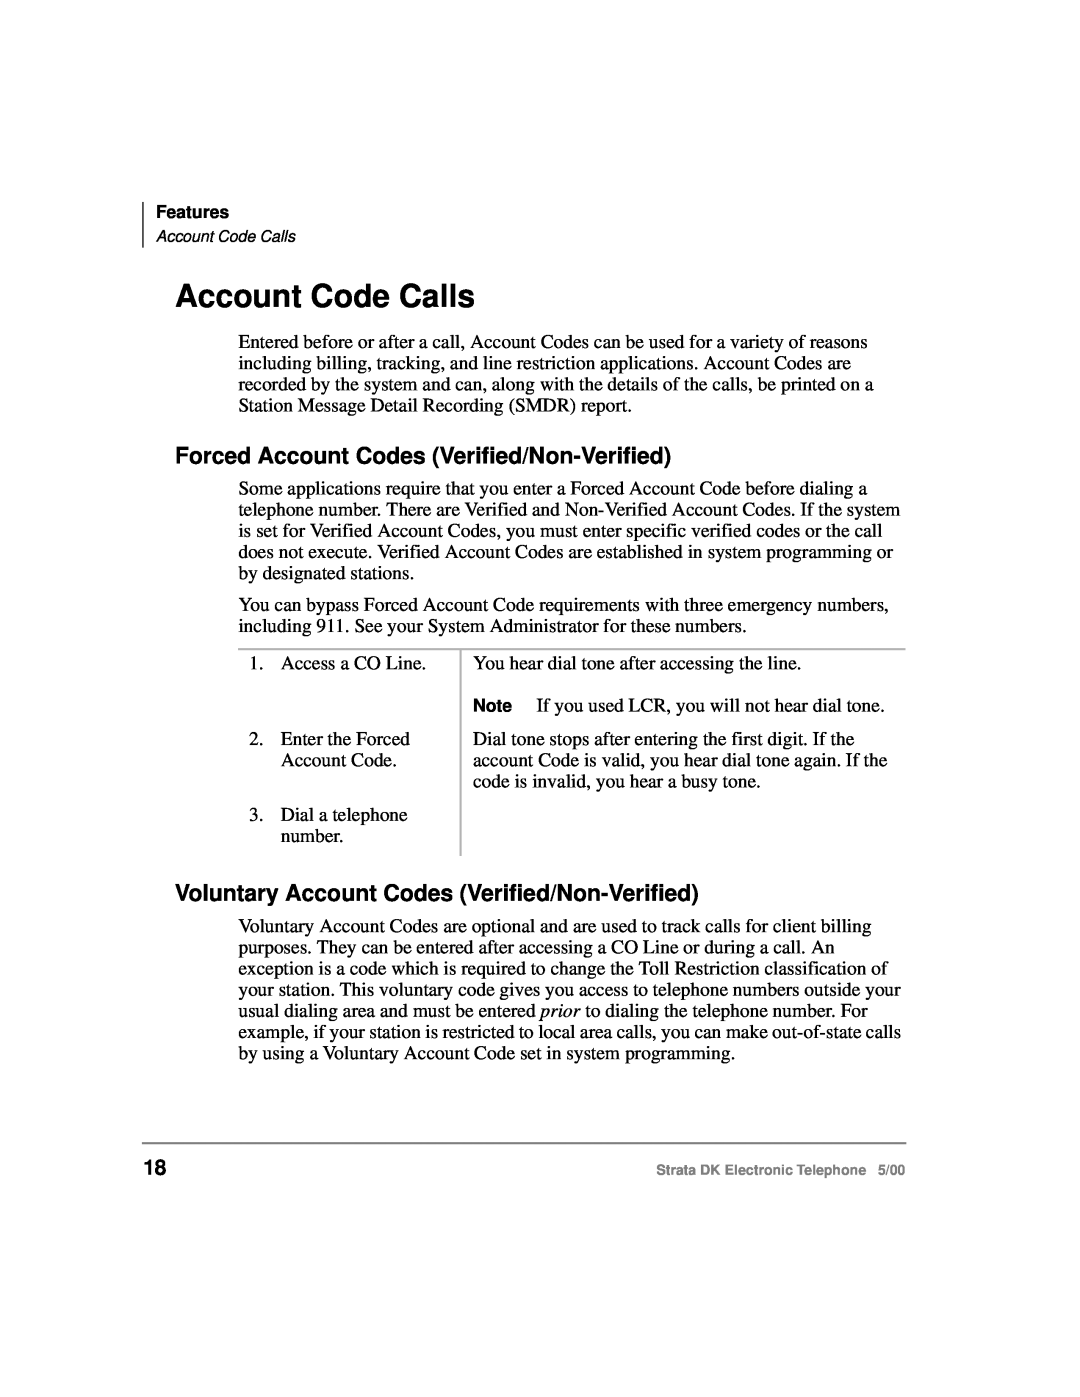 Toshiba Strata DK manual Account Code Calls, Forced Account Codes Verified/Non-Verified 